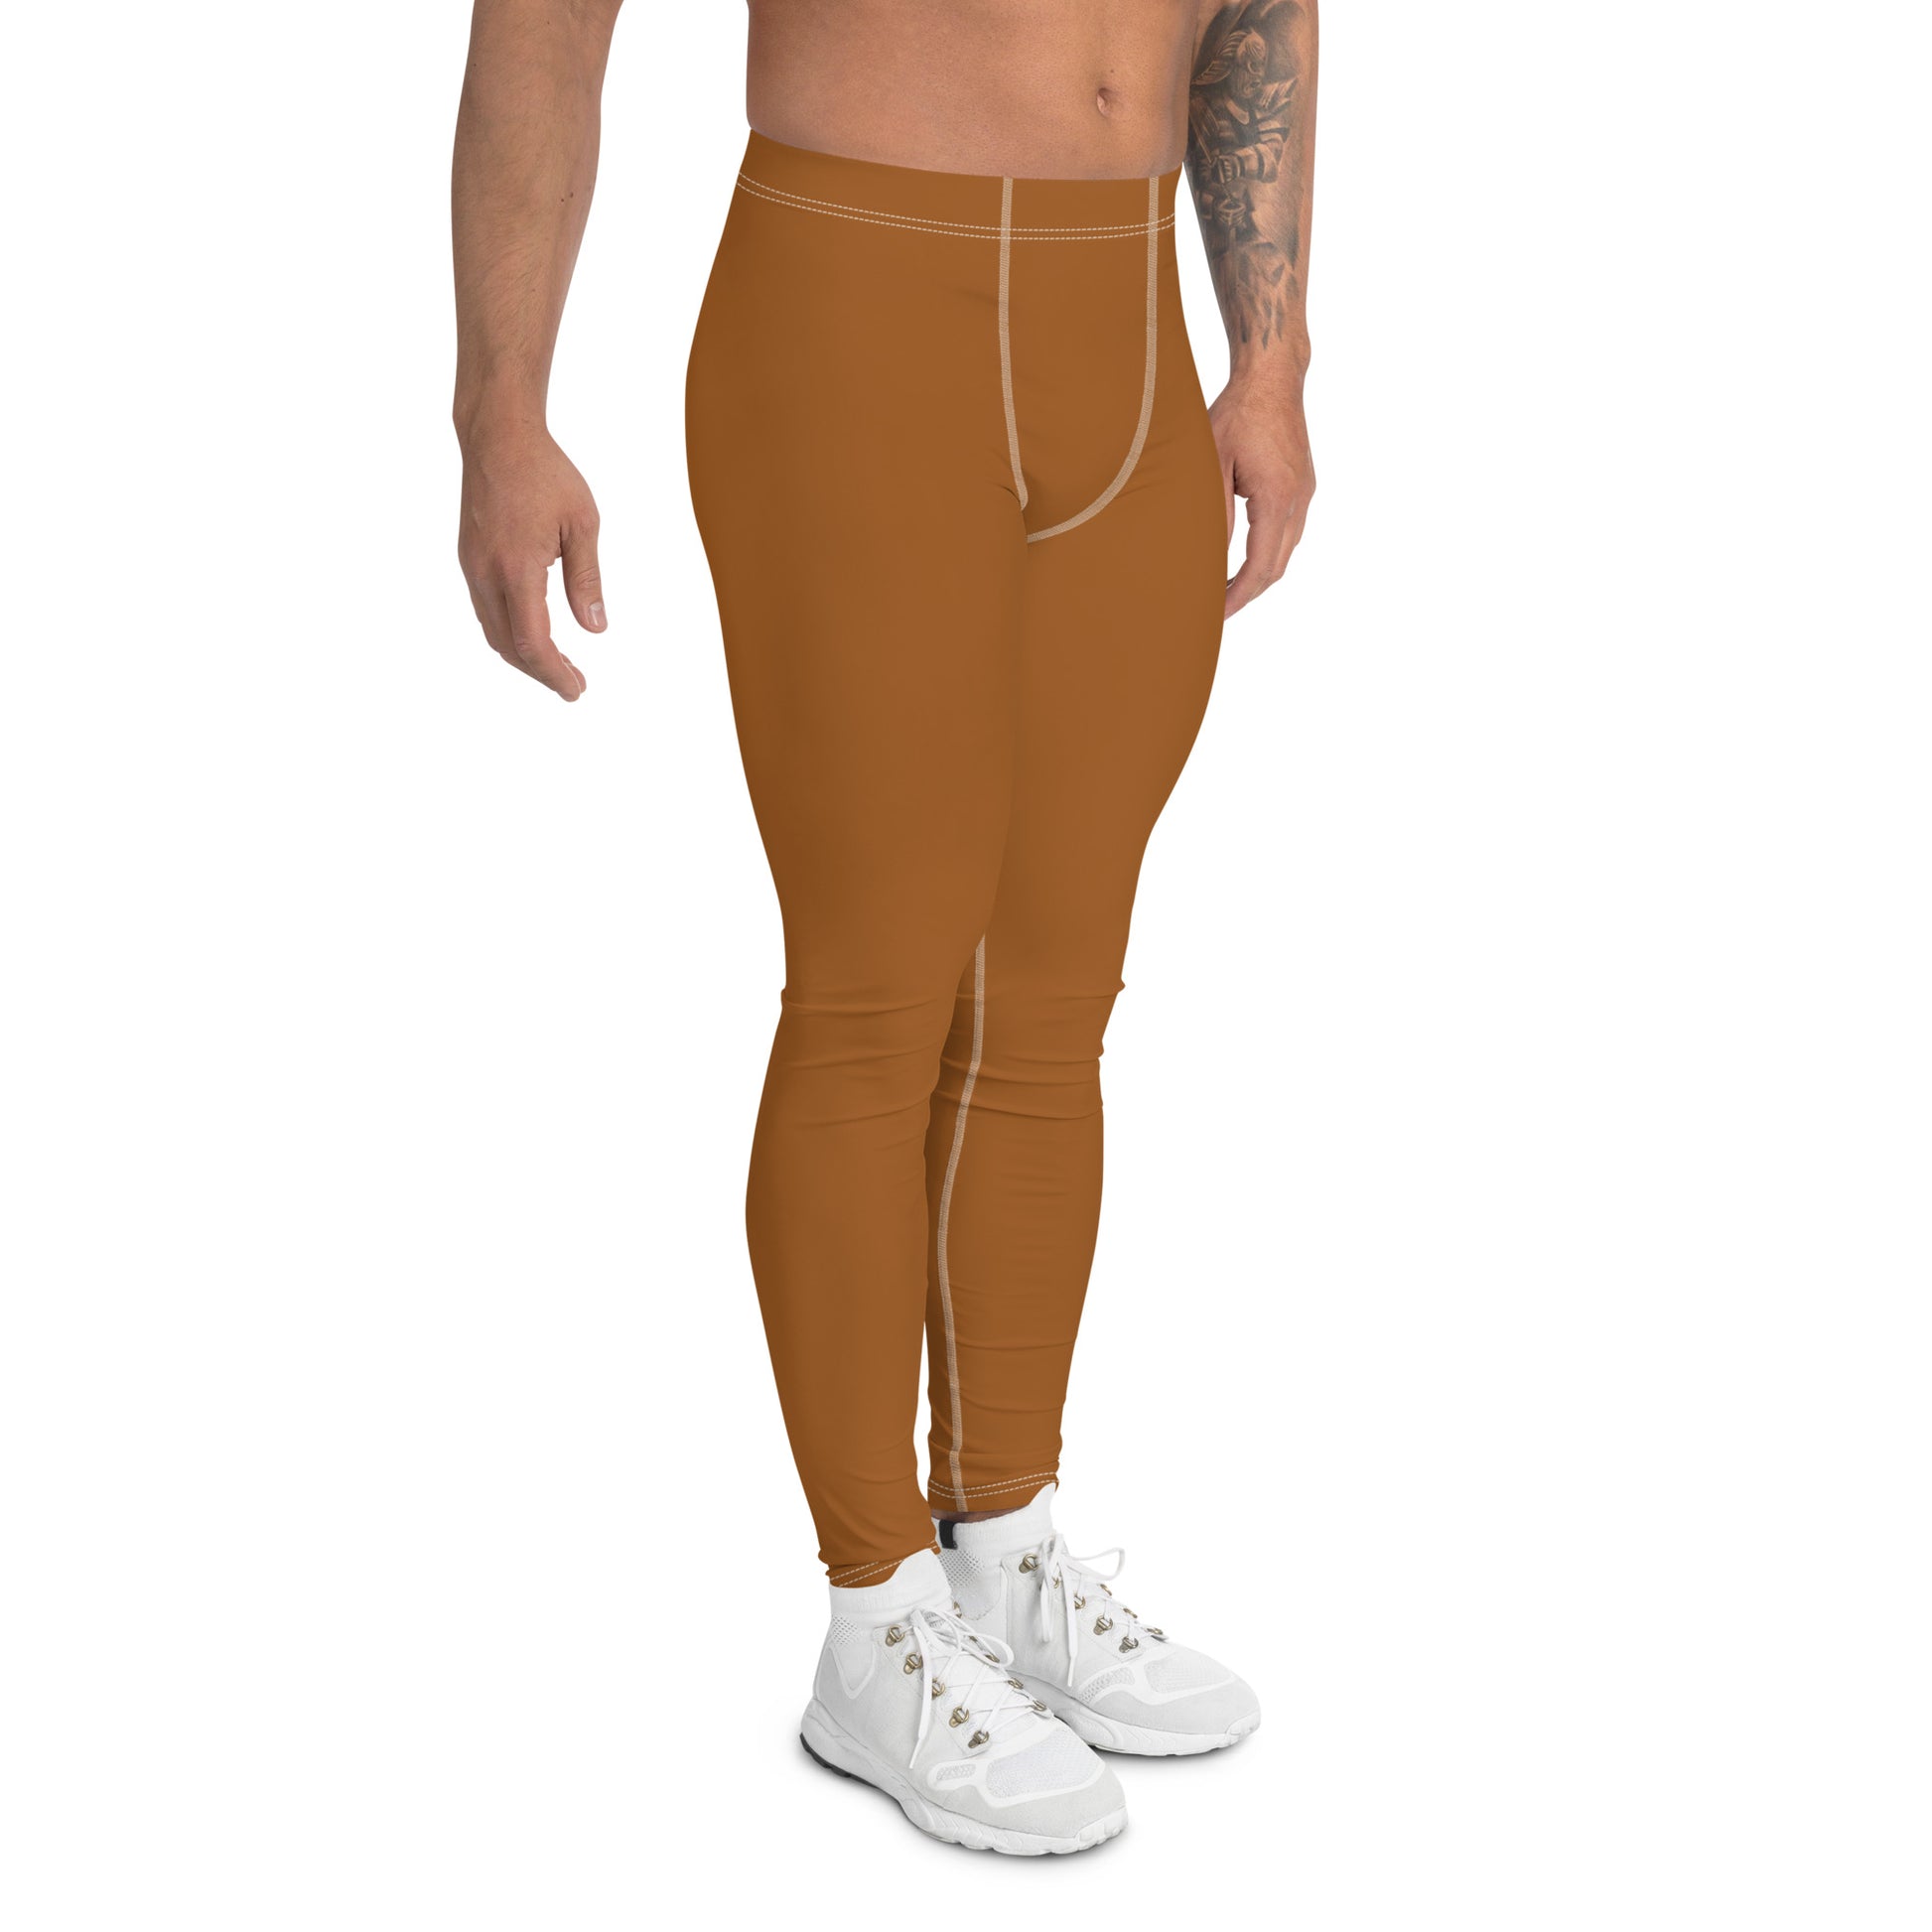 Humble  Sportswear, men's color match activewear leggings, compression pants